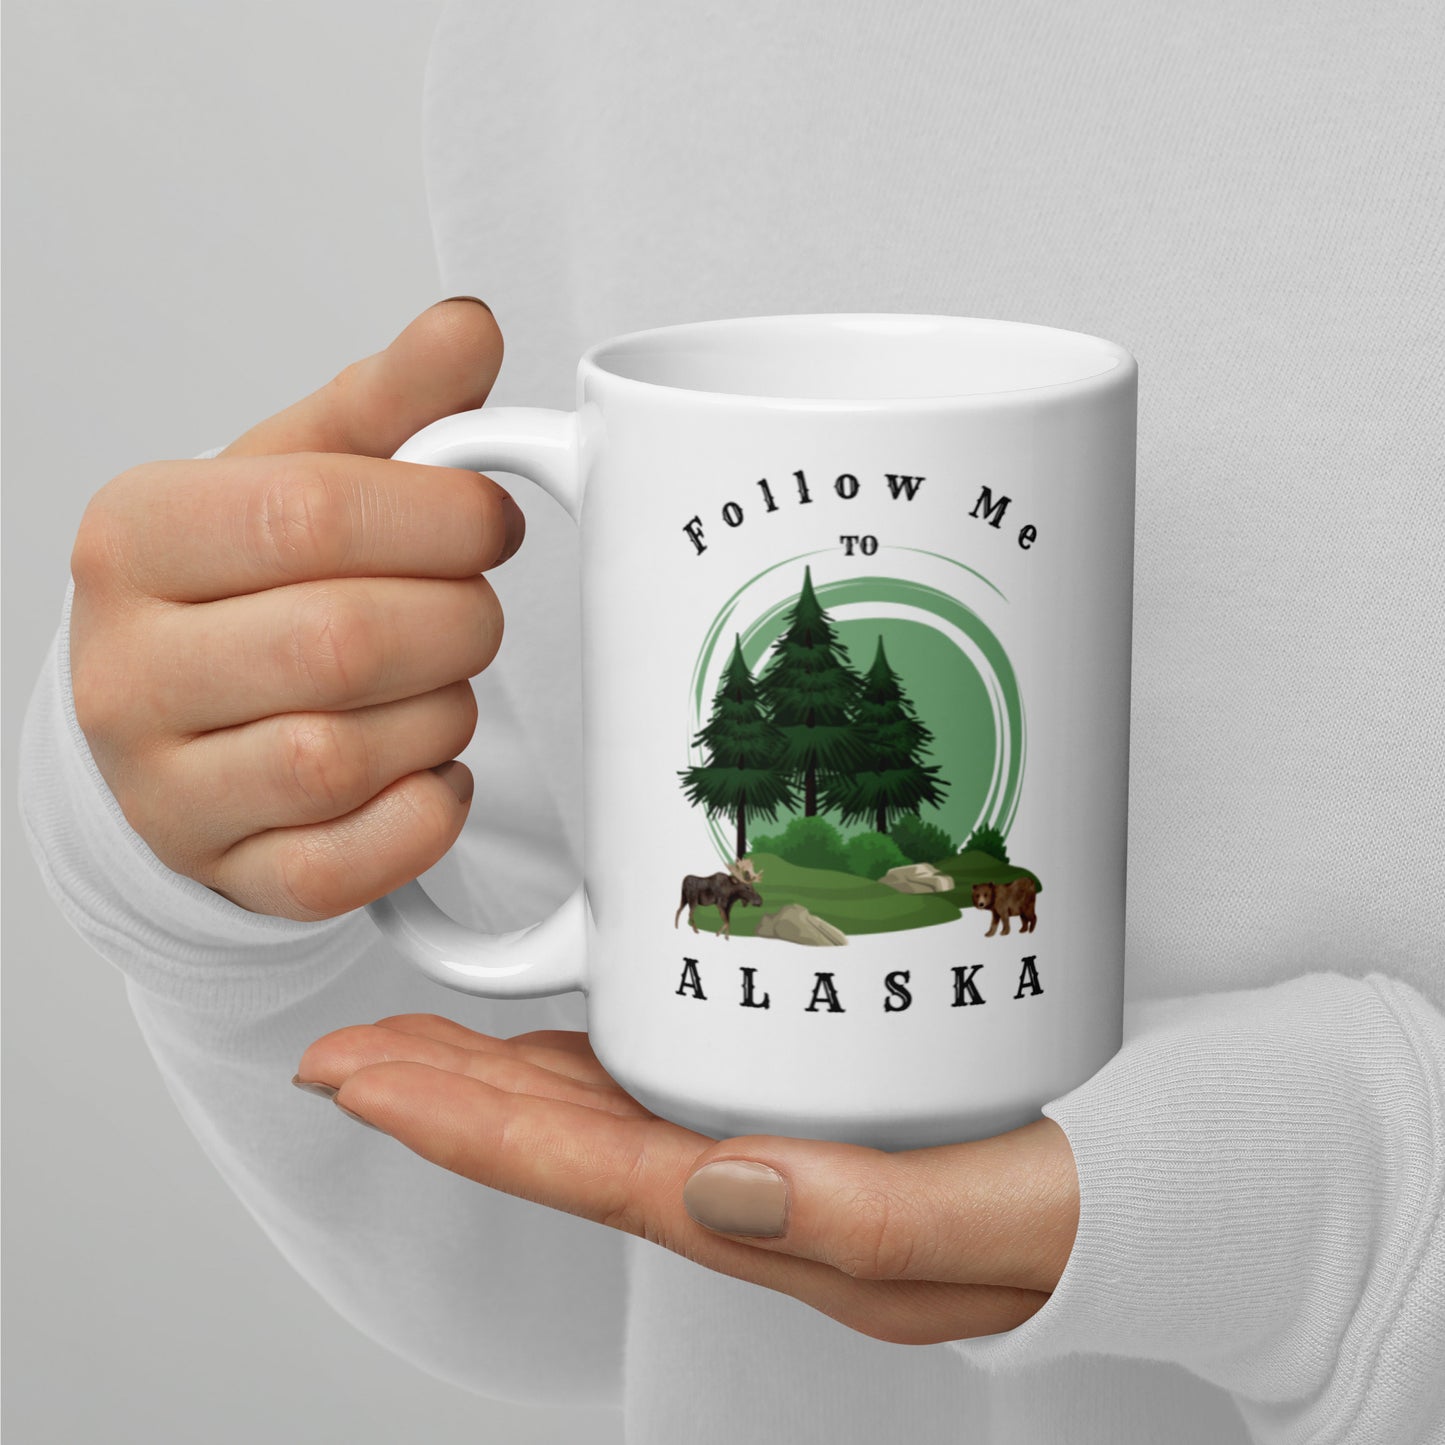 Follow Me to Alaska White Glossy Mug 15 oz.